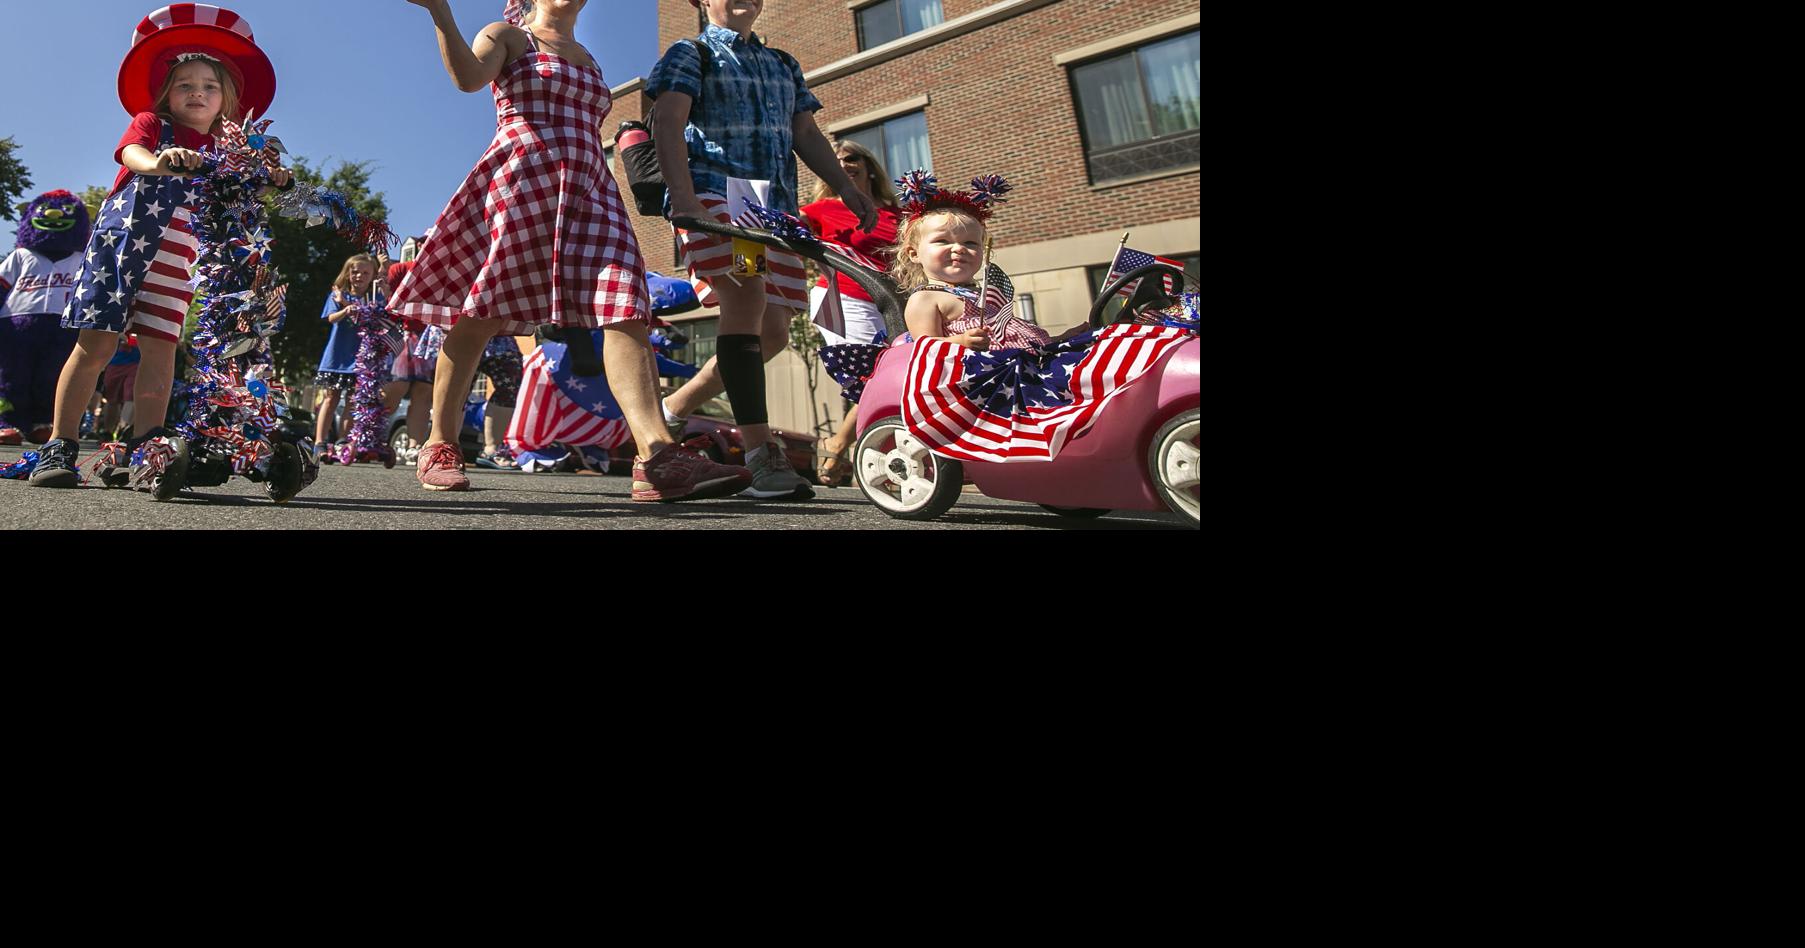 PHOTOS Fredericksburg region celebrates the Fourth of July